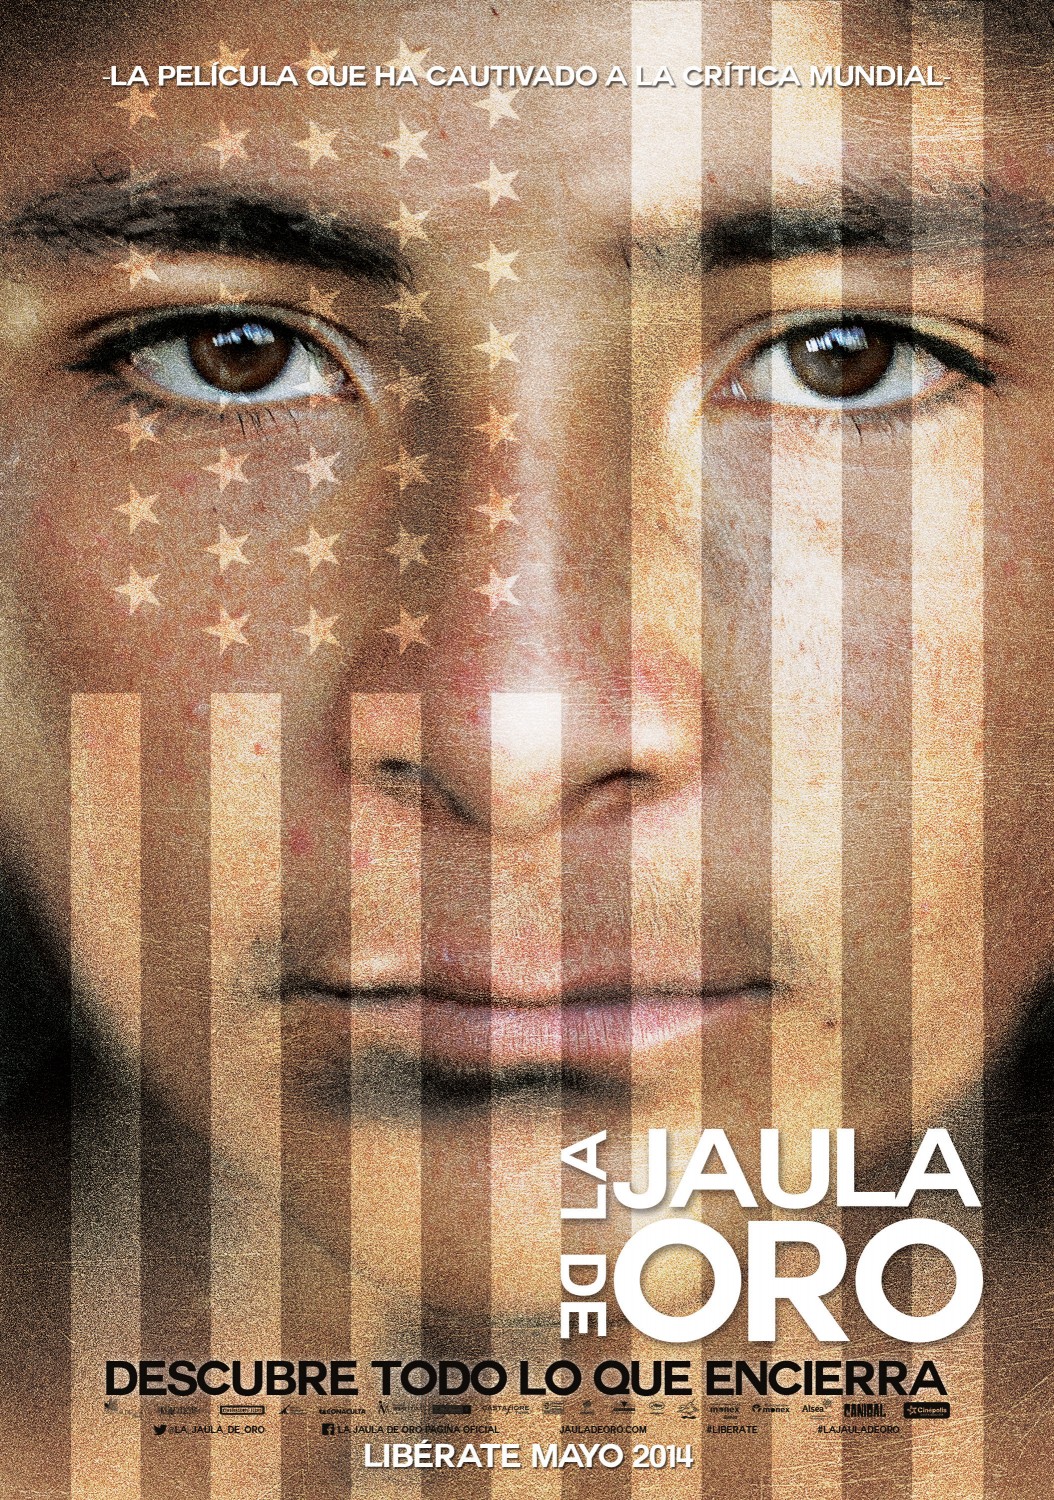 Extra Large Movie Poster Image for La jaula de oro (#2 of 8)